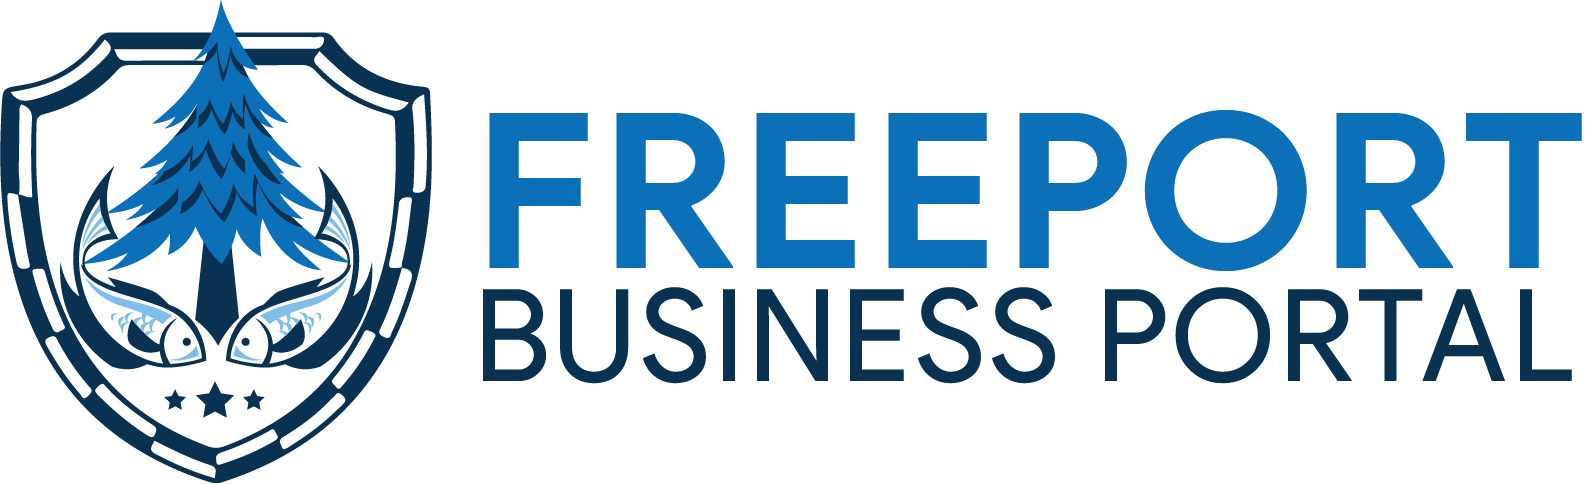 Freeport Business Portal